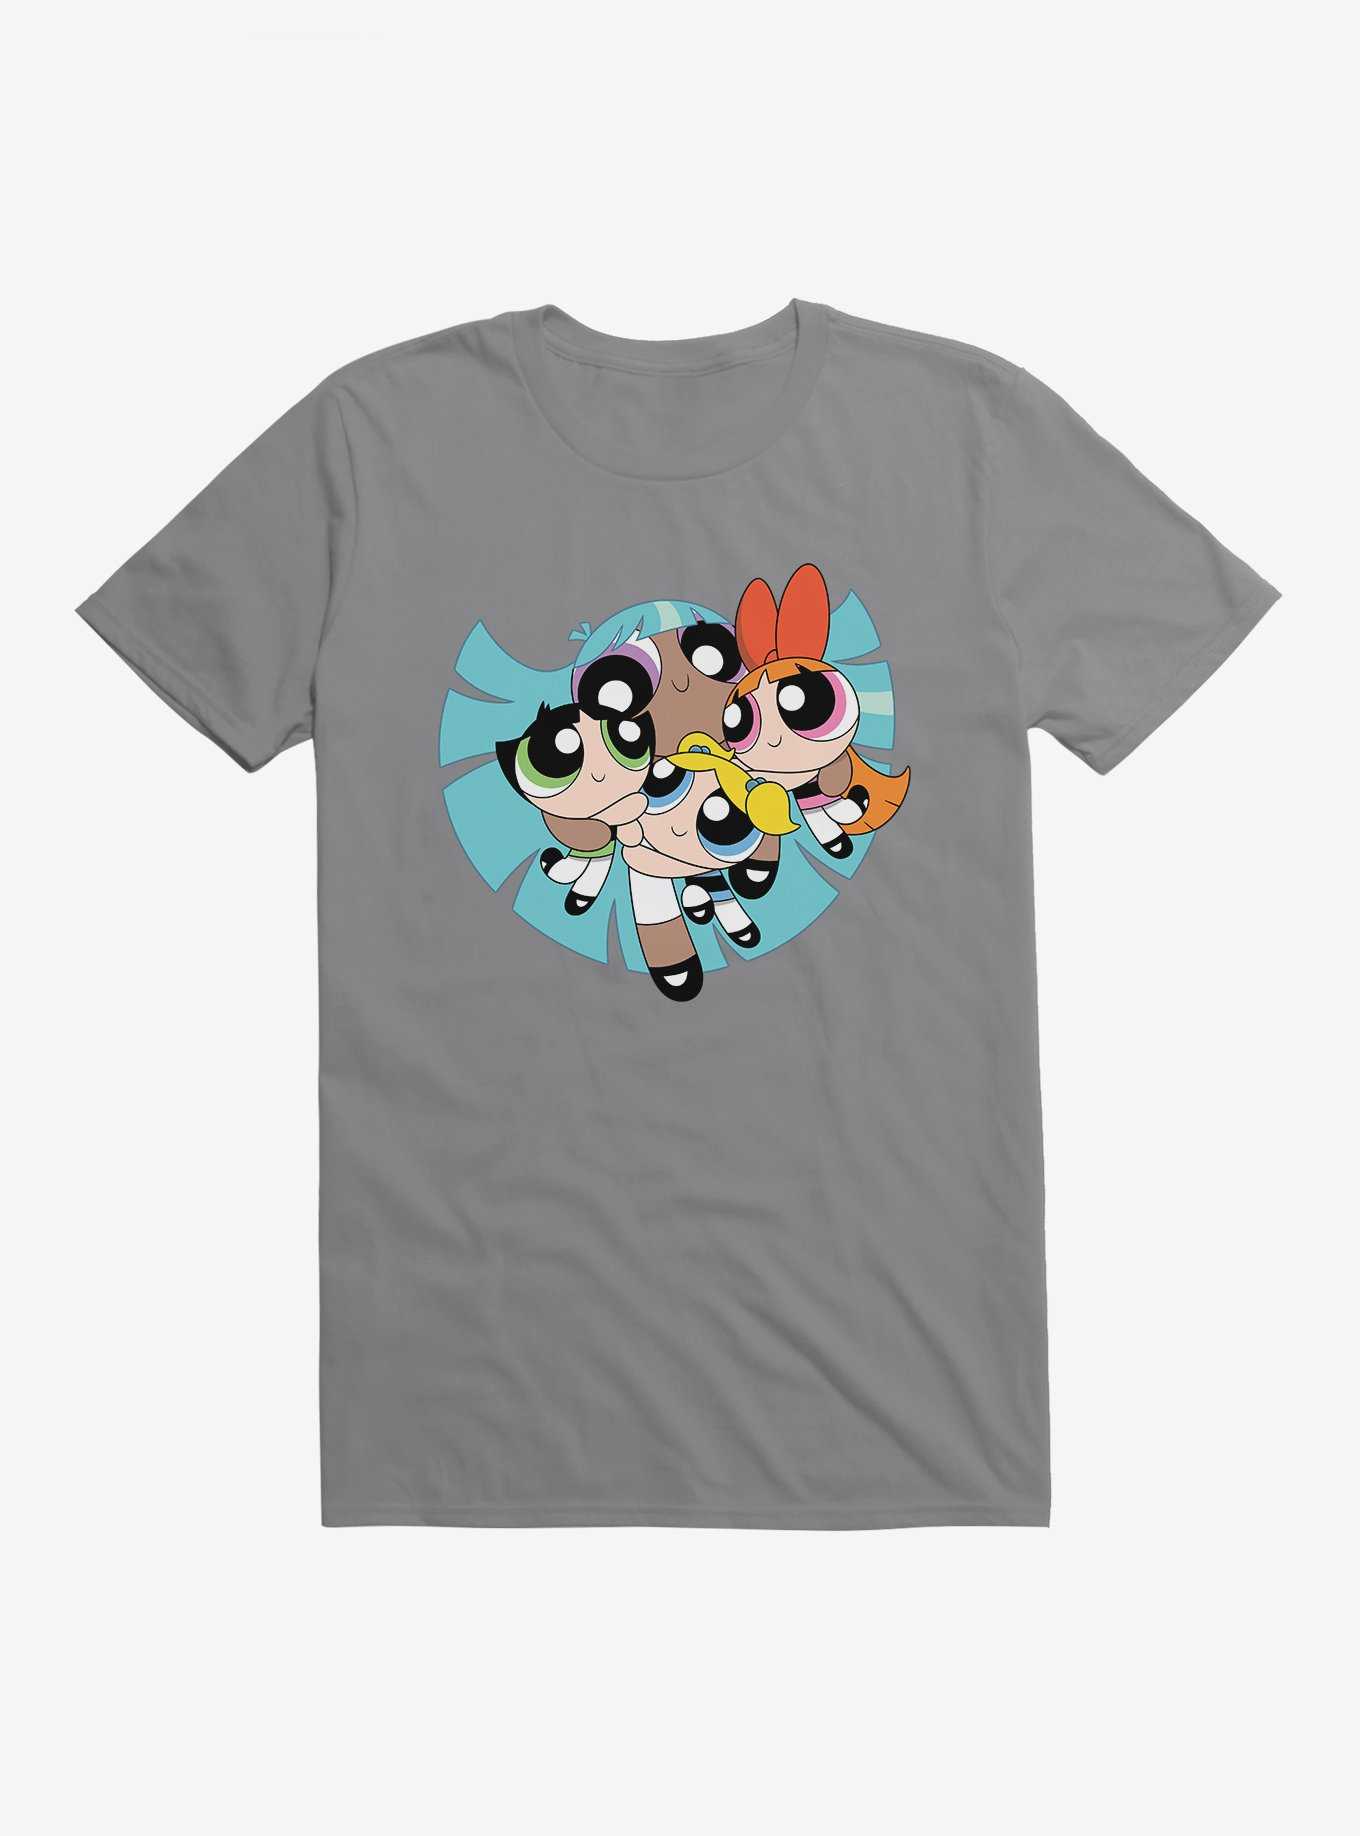 The Powerpuff Girls Group Hug Open Eyes T-Shirt, , hi-res